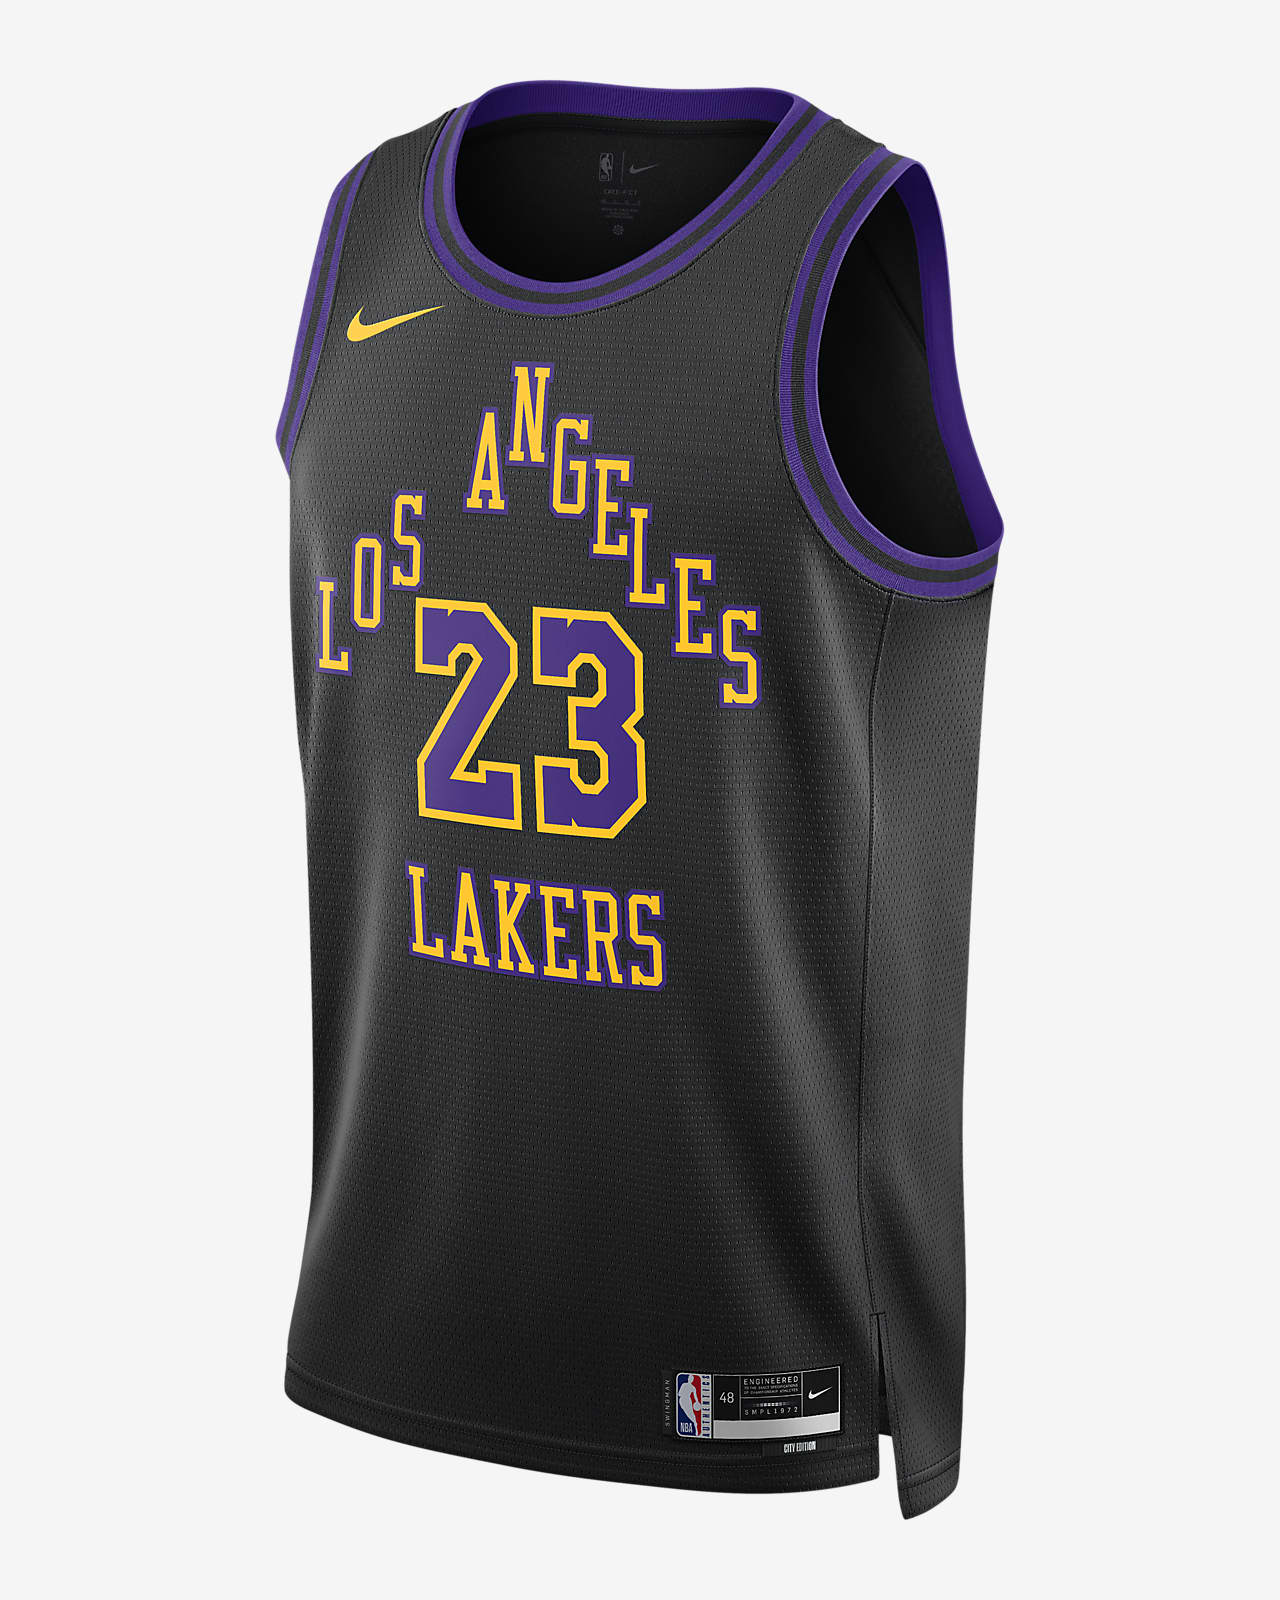 NIKE/NBA Lakers LeBron James Swingman【M】